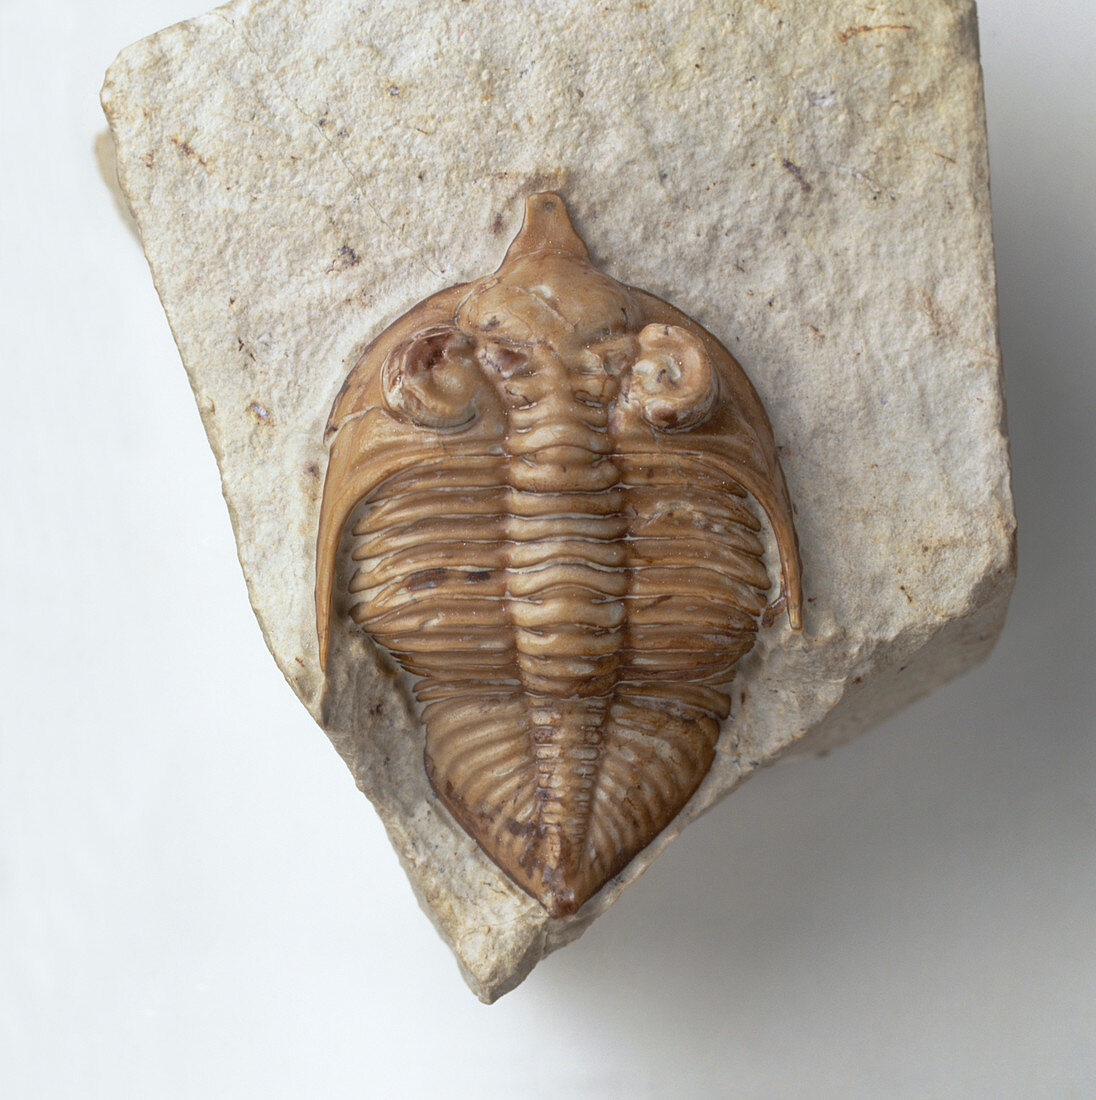 Trilobite fossil exoskeleton in stone